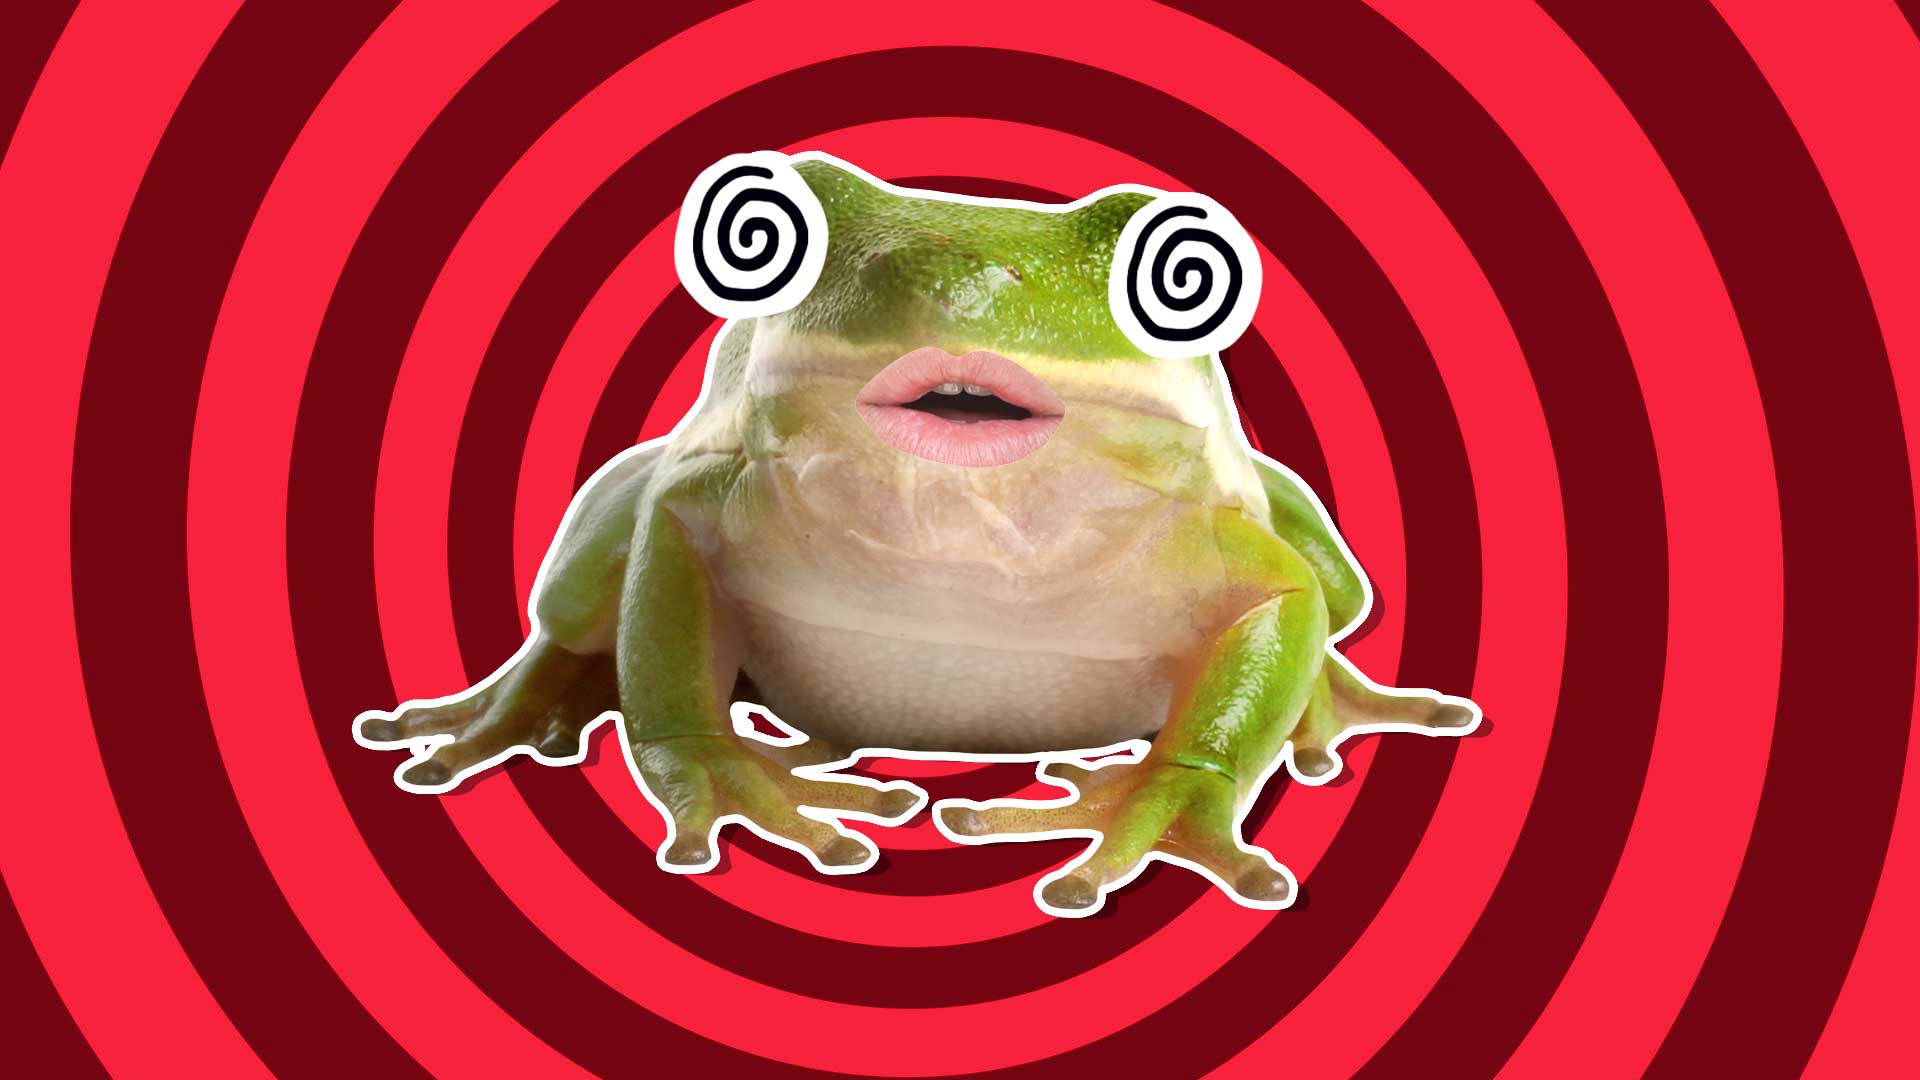 A hypnotised frog